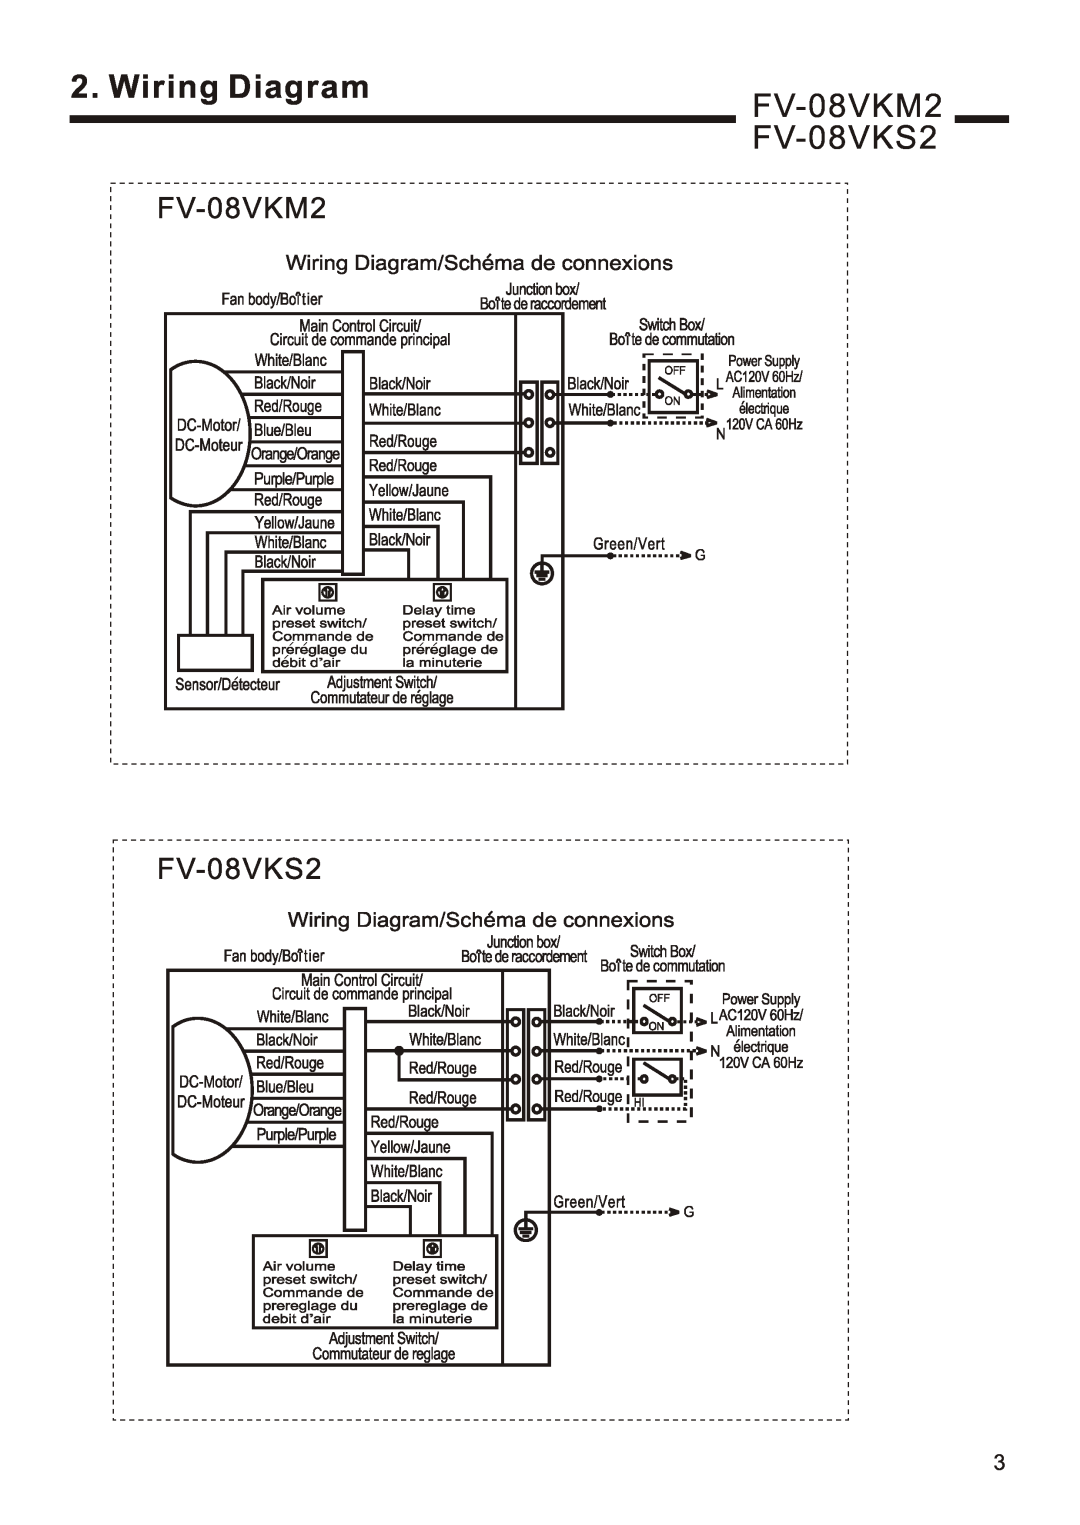 Panasonic service manual Wiring Diagram, FV-08VKM2 FV-08VKS2 